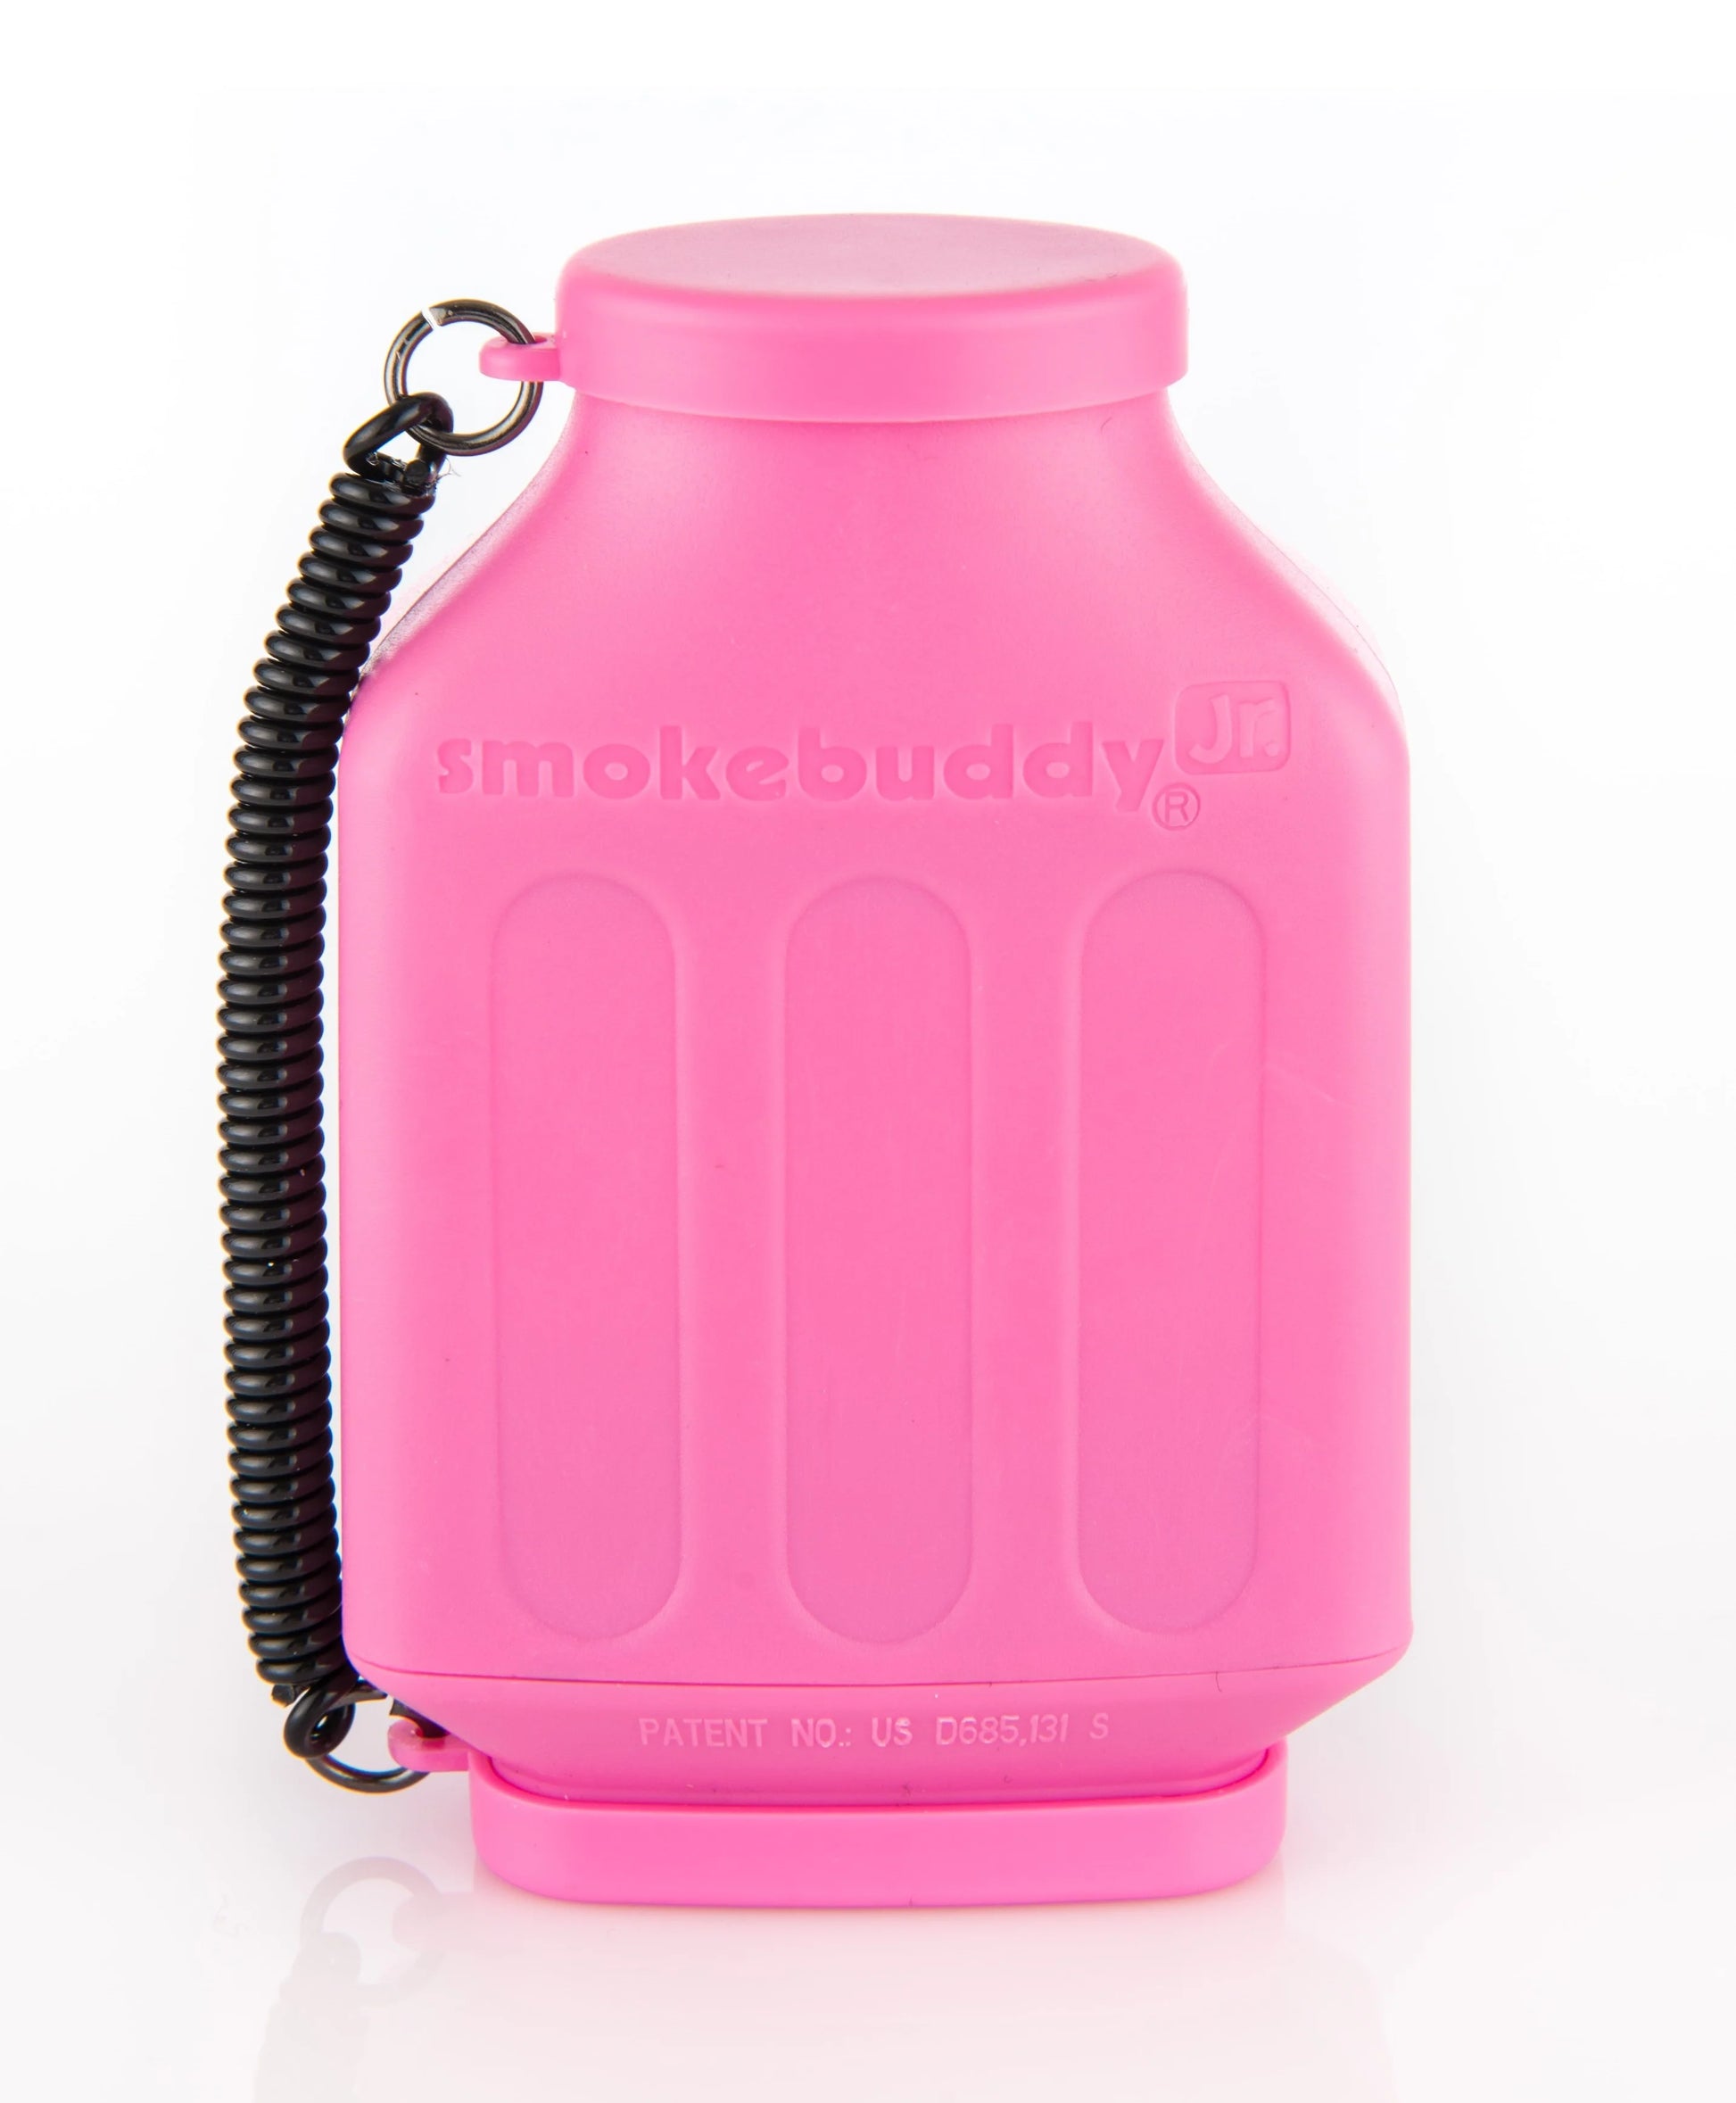 SmokeBuddy Personal Air Filter Jr. | Pink